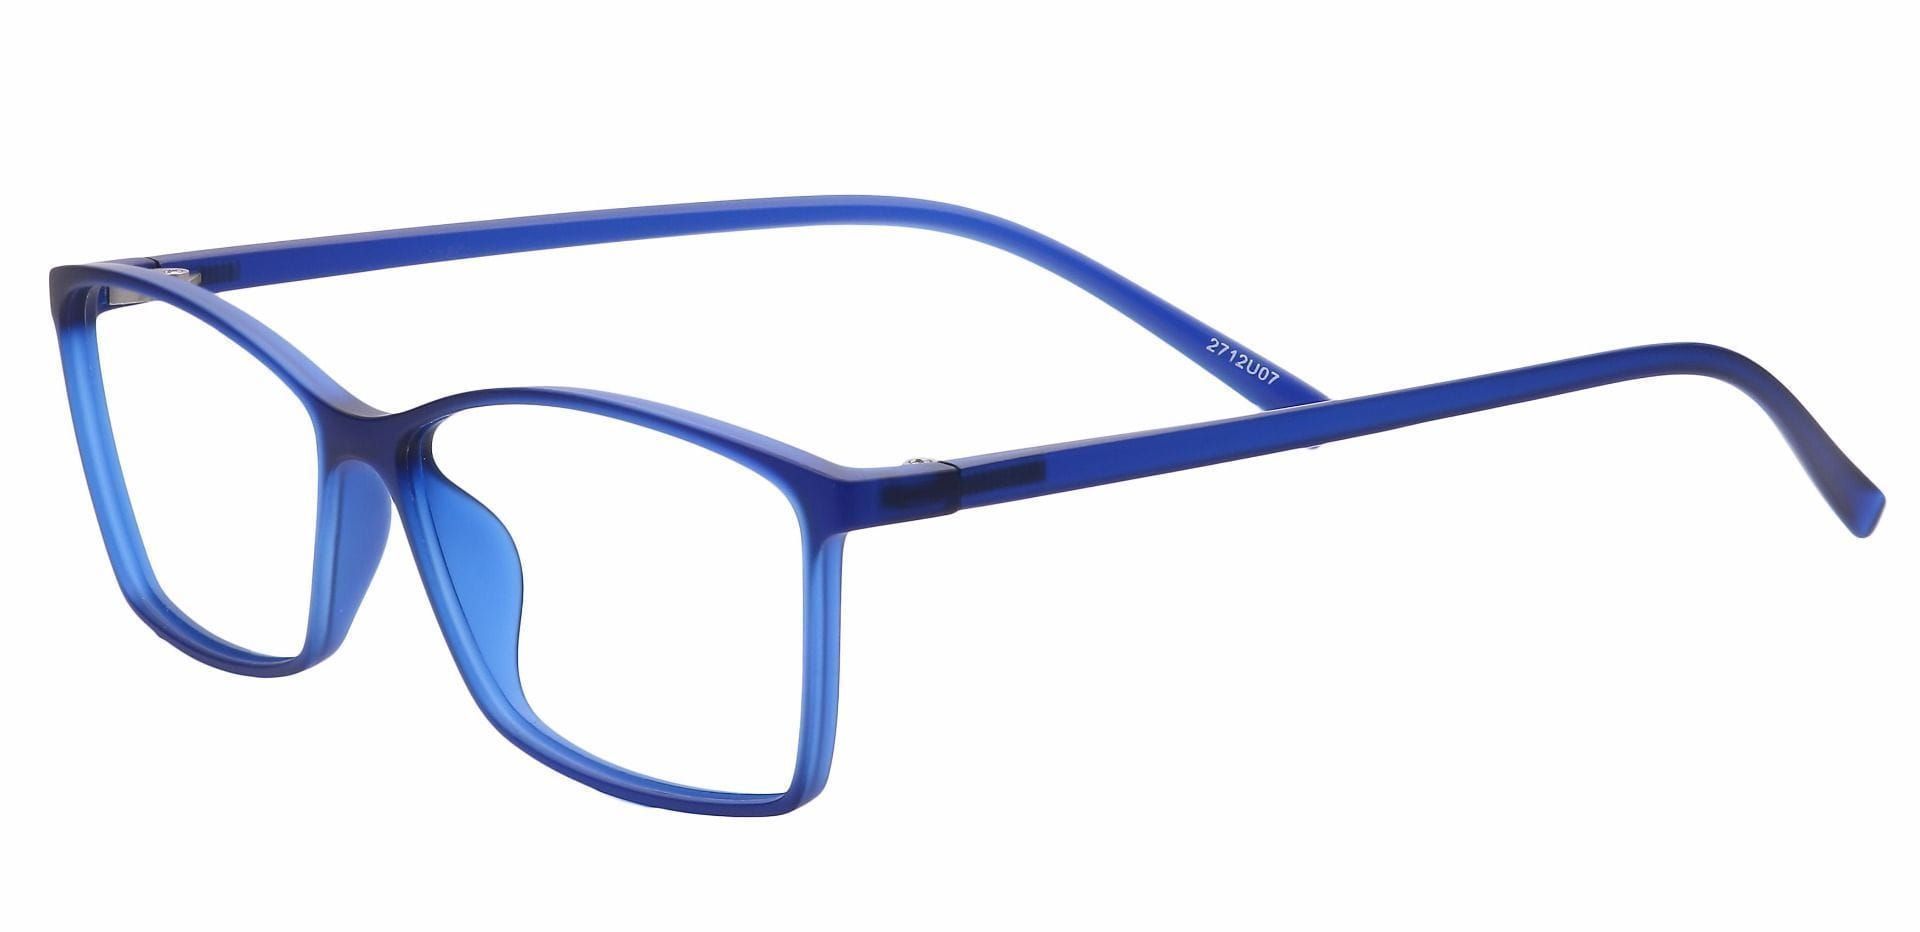 Align Rectangle Prescription Glasses - Blue